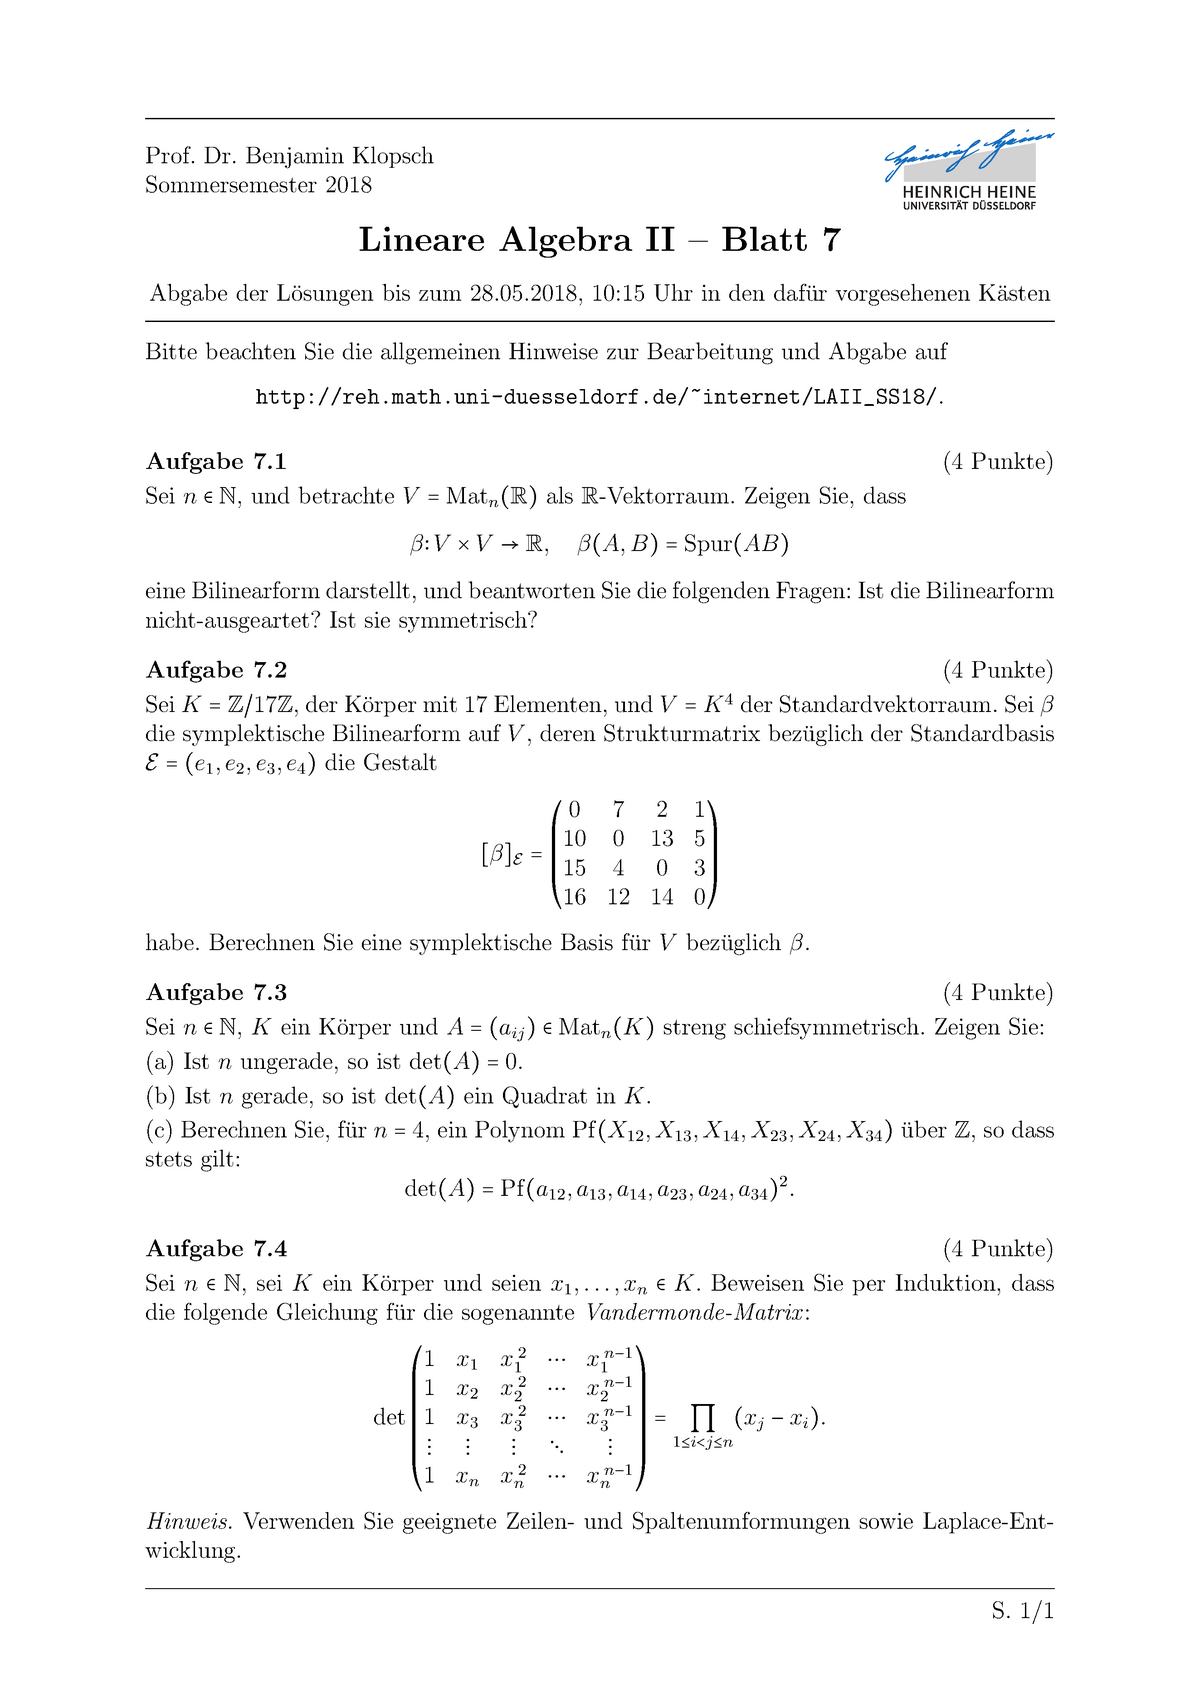 lineare algebra 2 eth